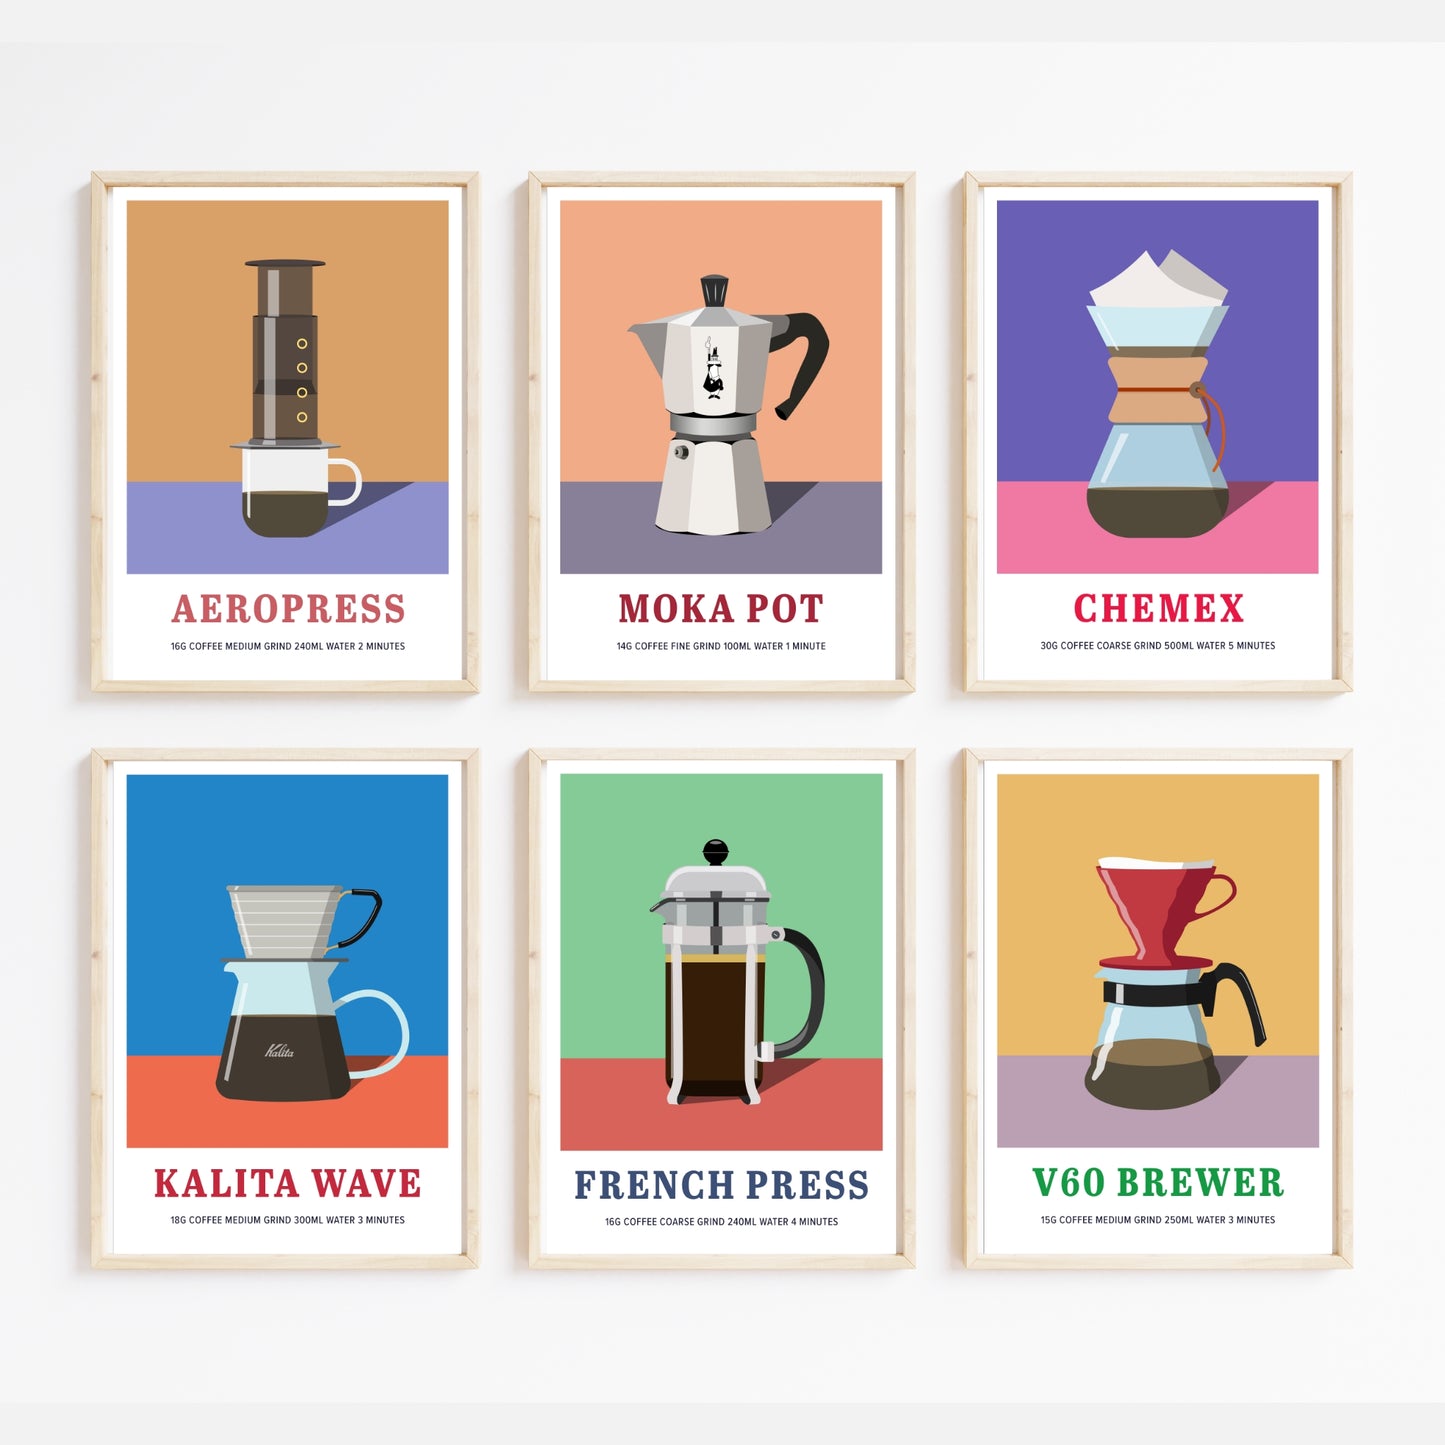 Chemex Print - Coffee Maker Series